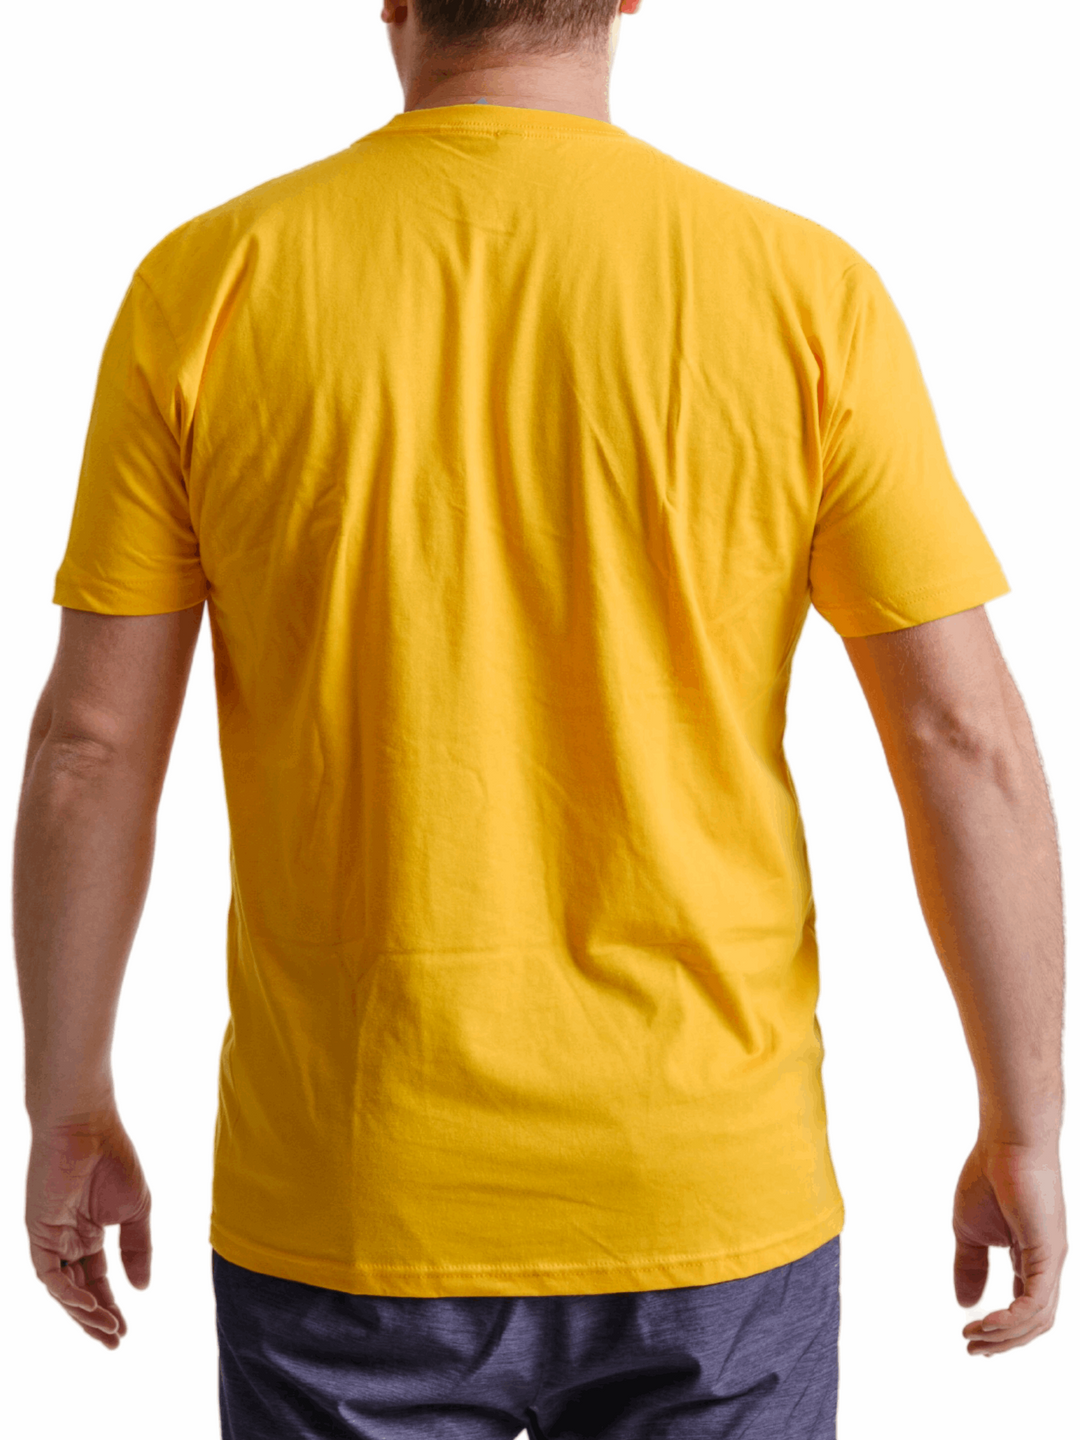 Baylor University Bears Sic 'Em Logo Gold T-Shirt